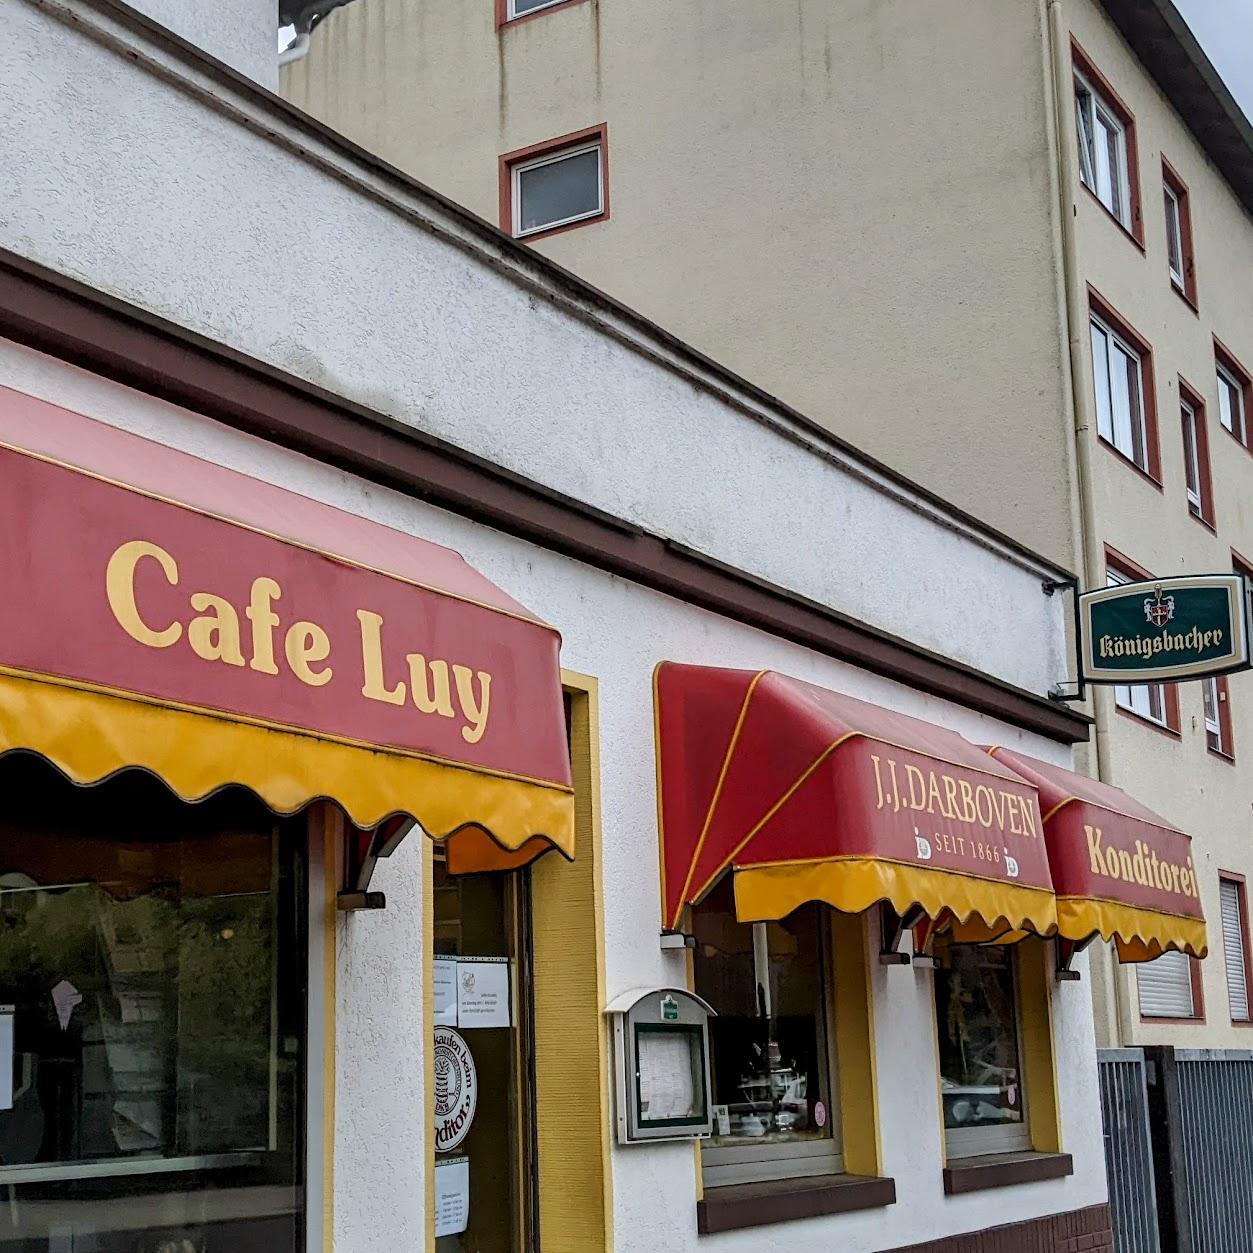 Restaurant "Café Luy" in Koblenz